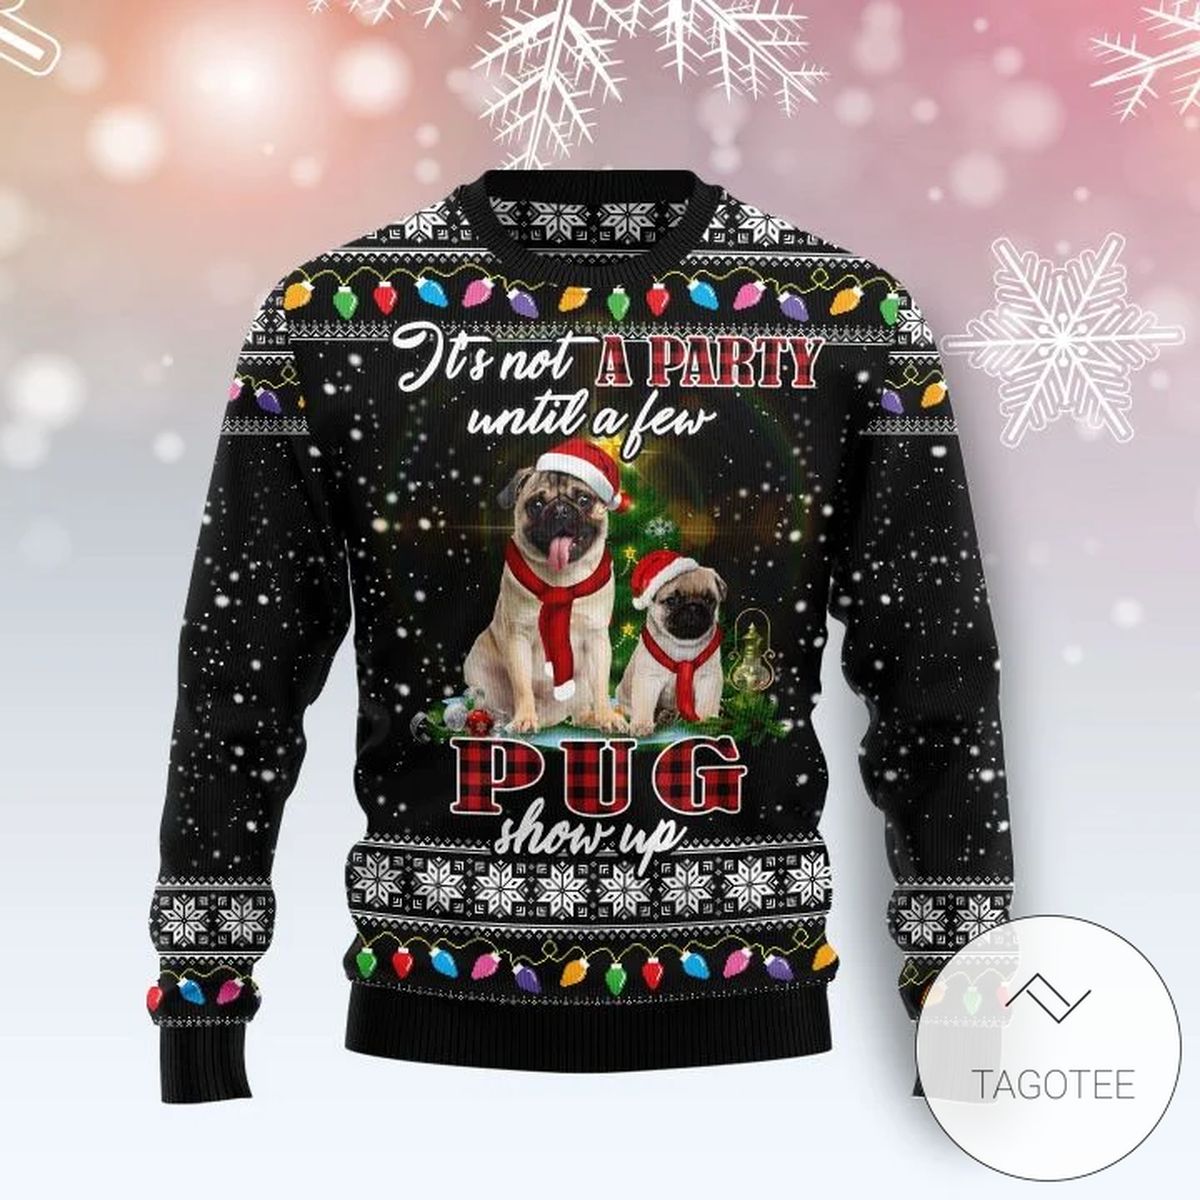 Pug Show Up Sweatshirt Knitted Ugly Christmas Sweater